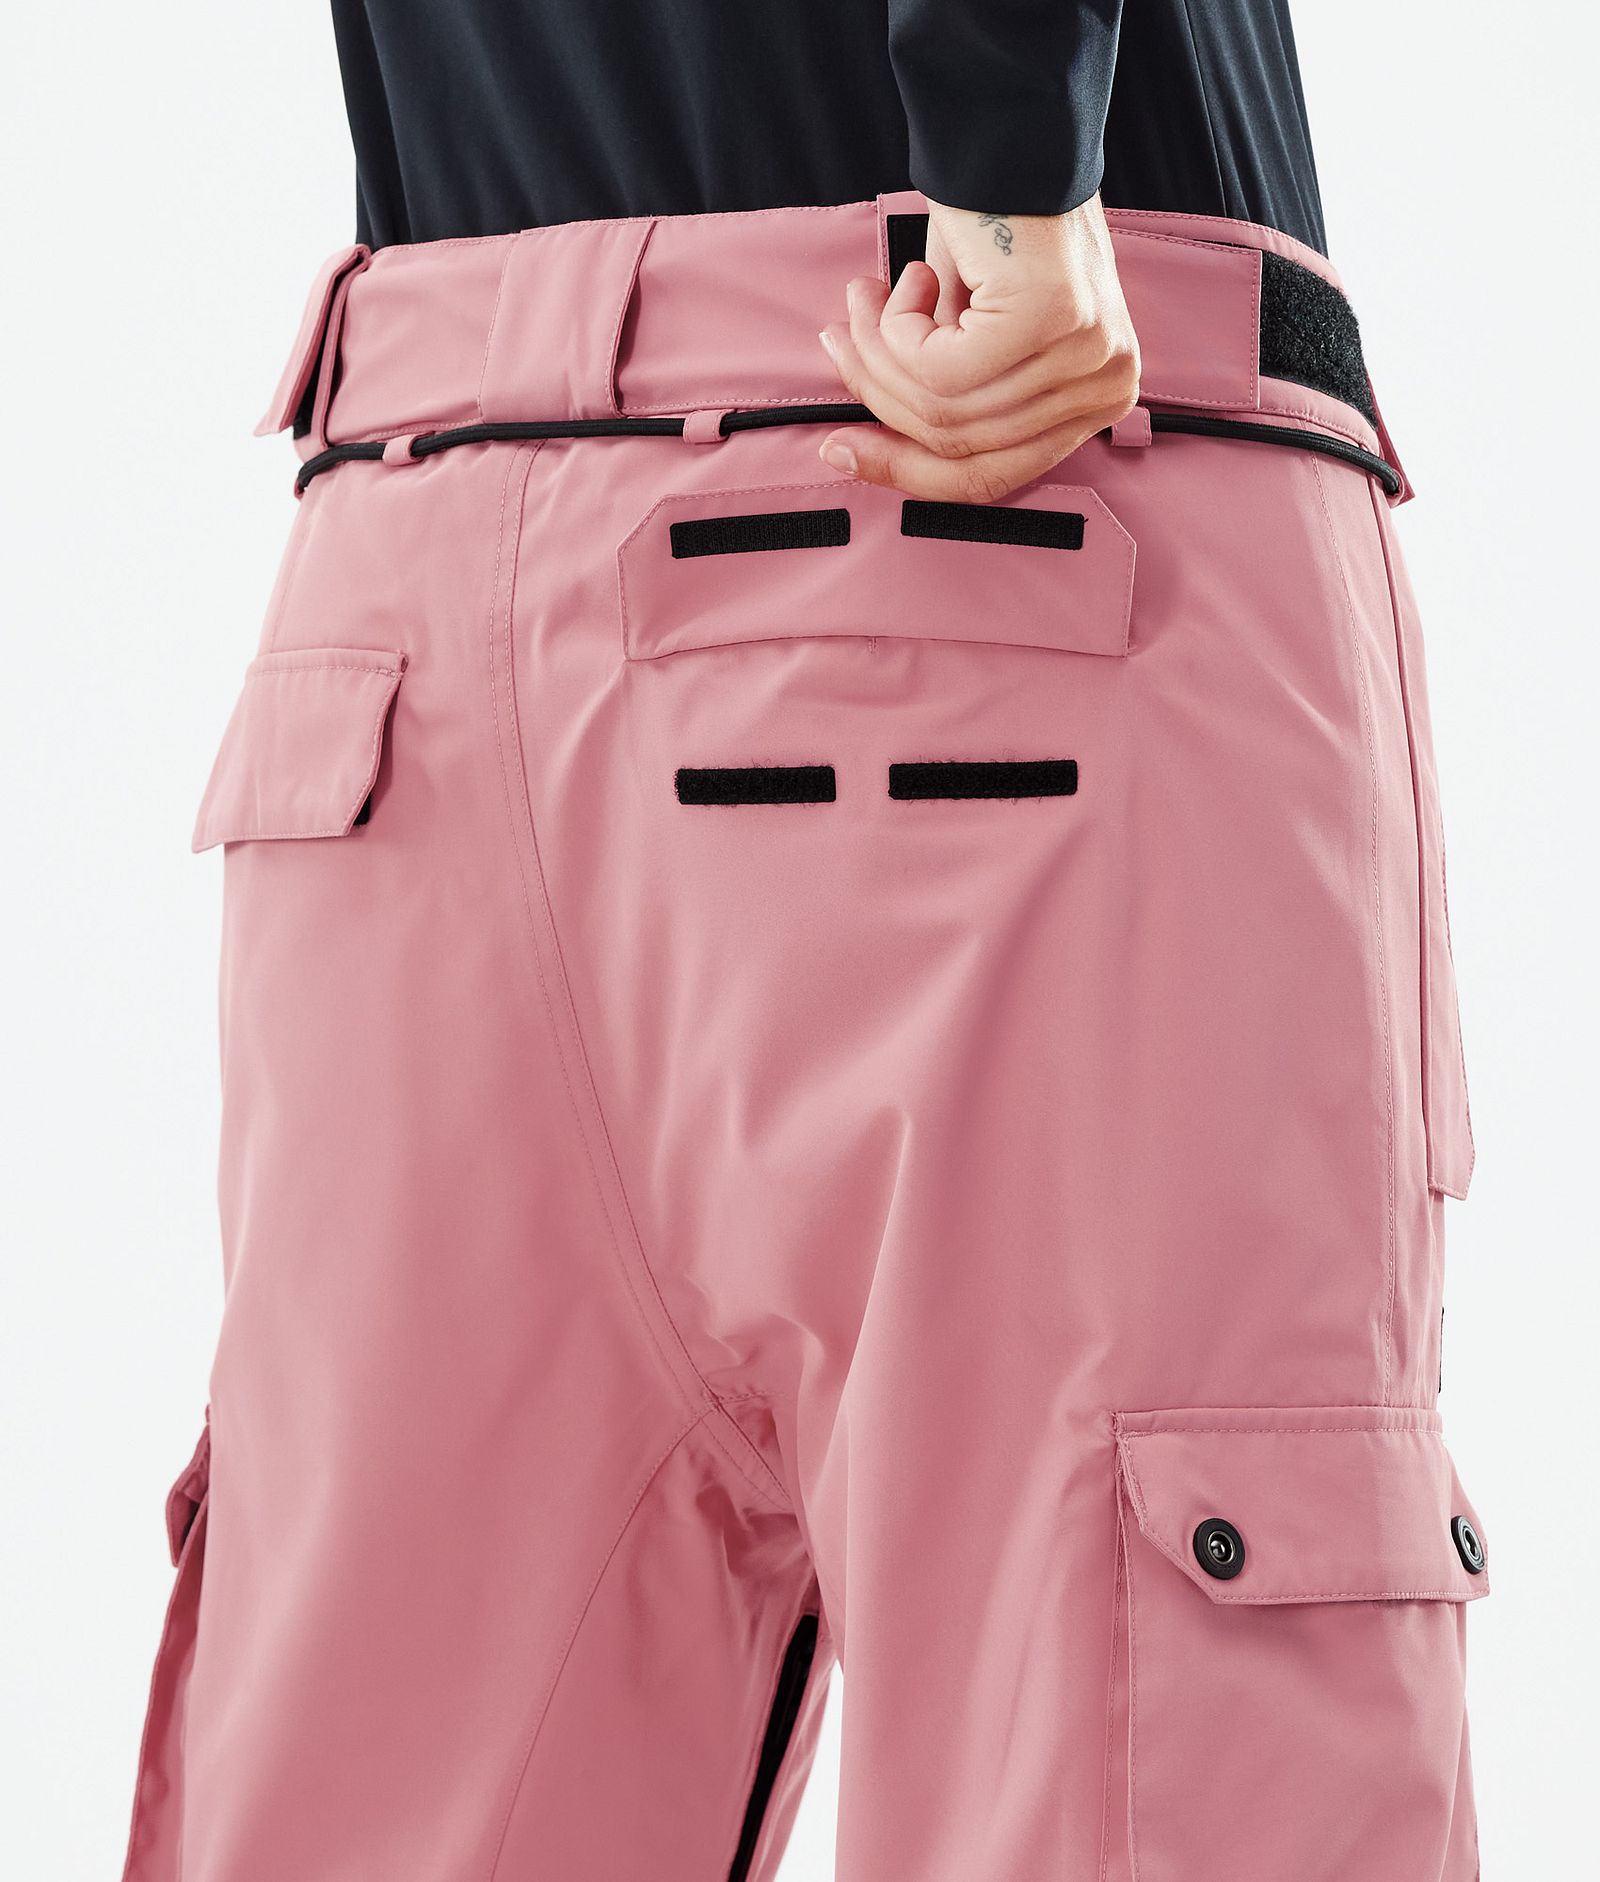 Dope Iconic W Snowboard Pants Women Pink